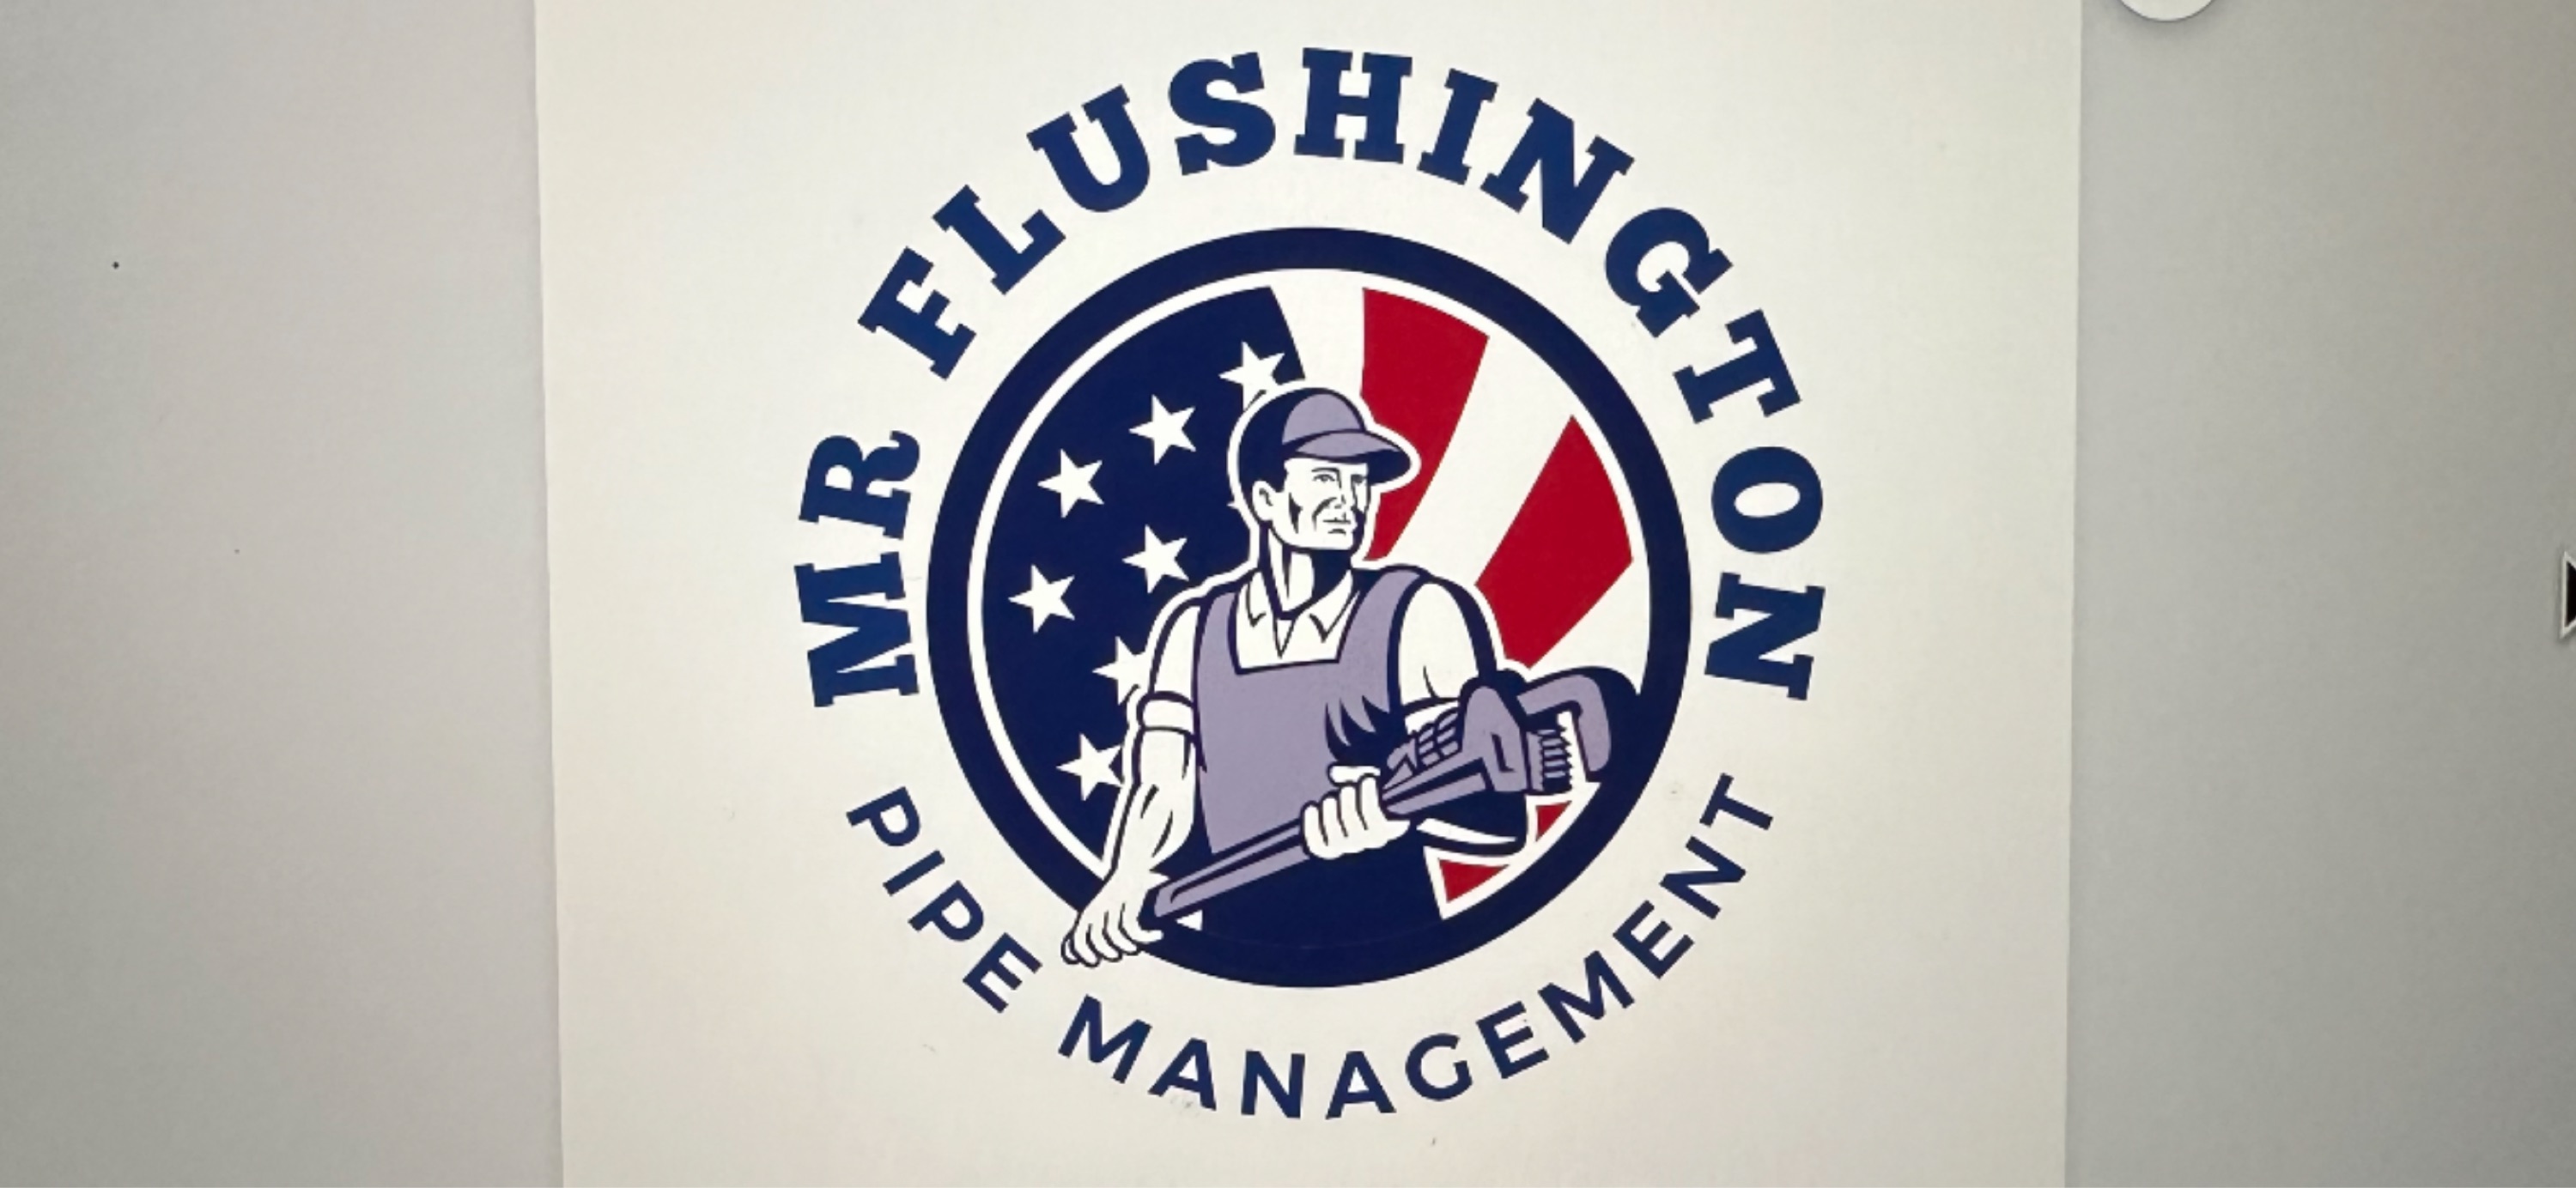 Mr. Flushington Logo